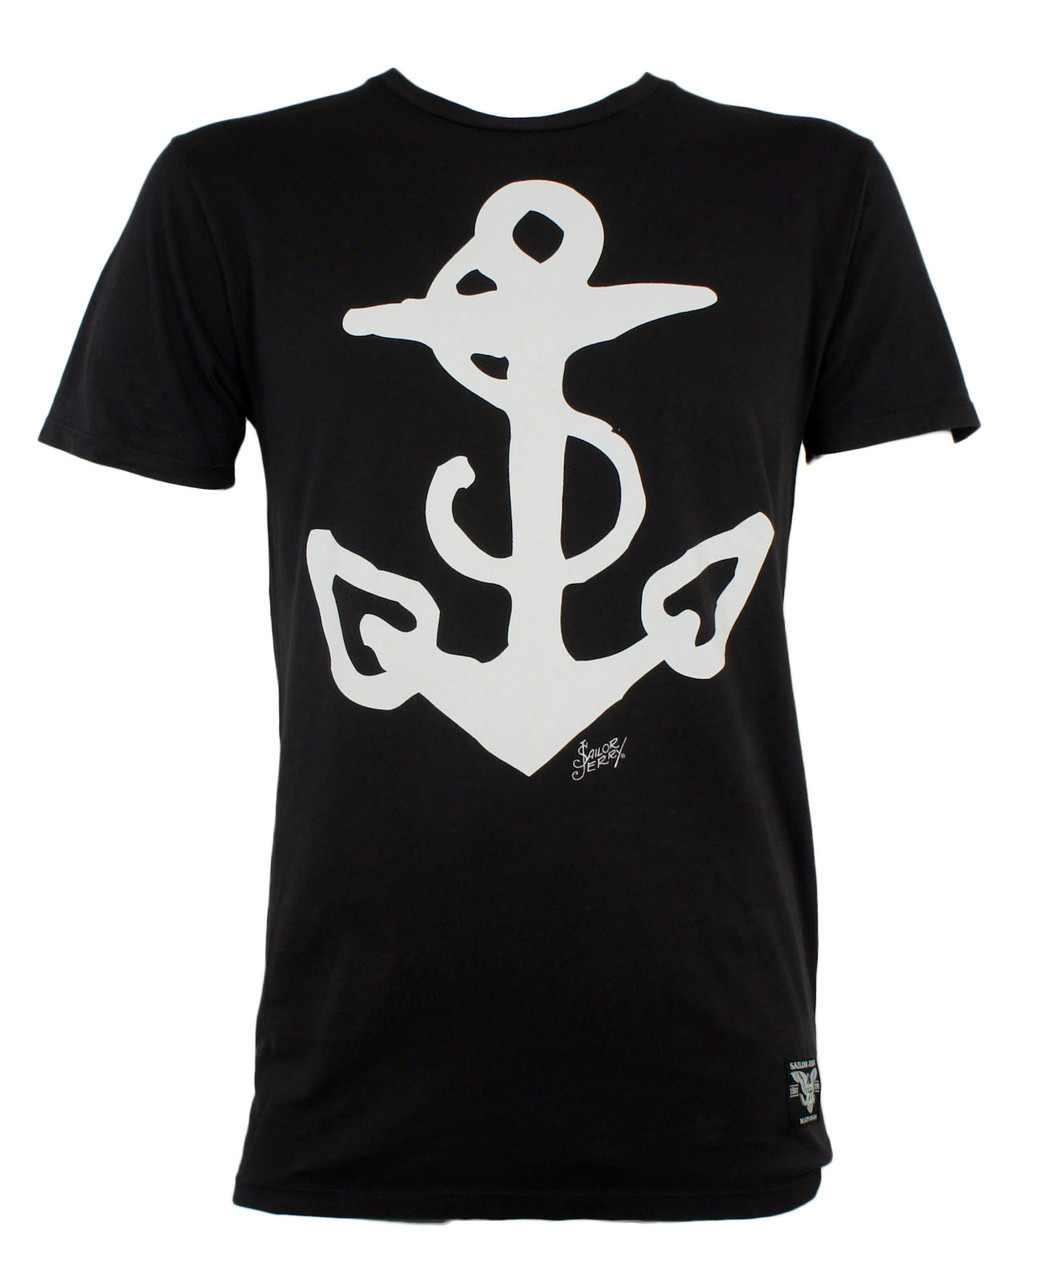 Sailor Jerry T-Shirt - Anchor - Merch2rock Alternative Clothing